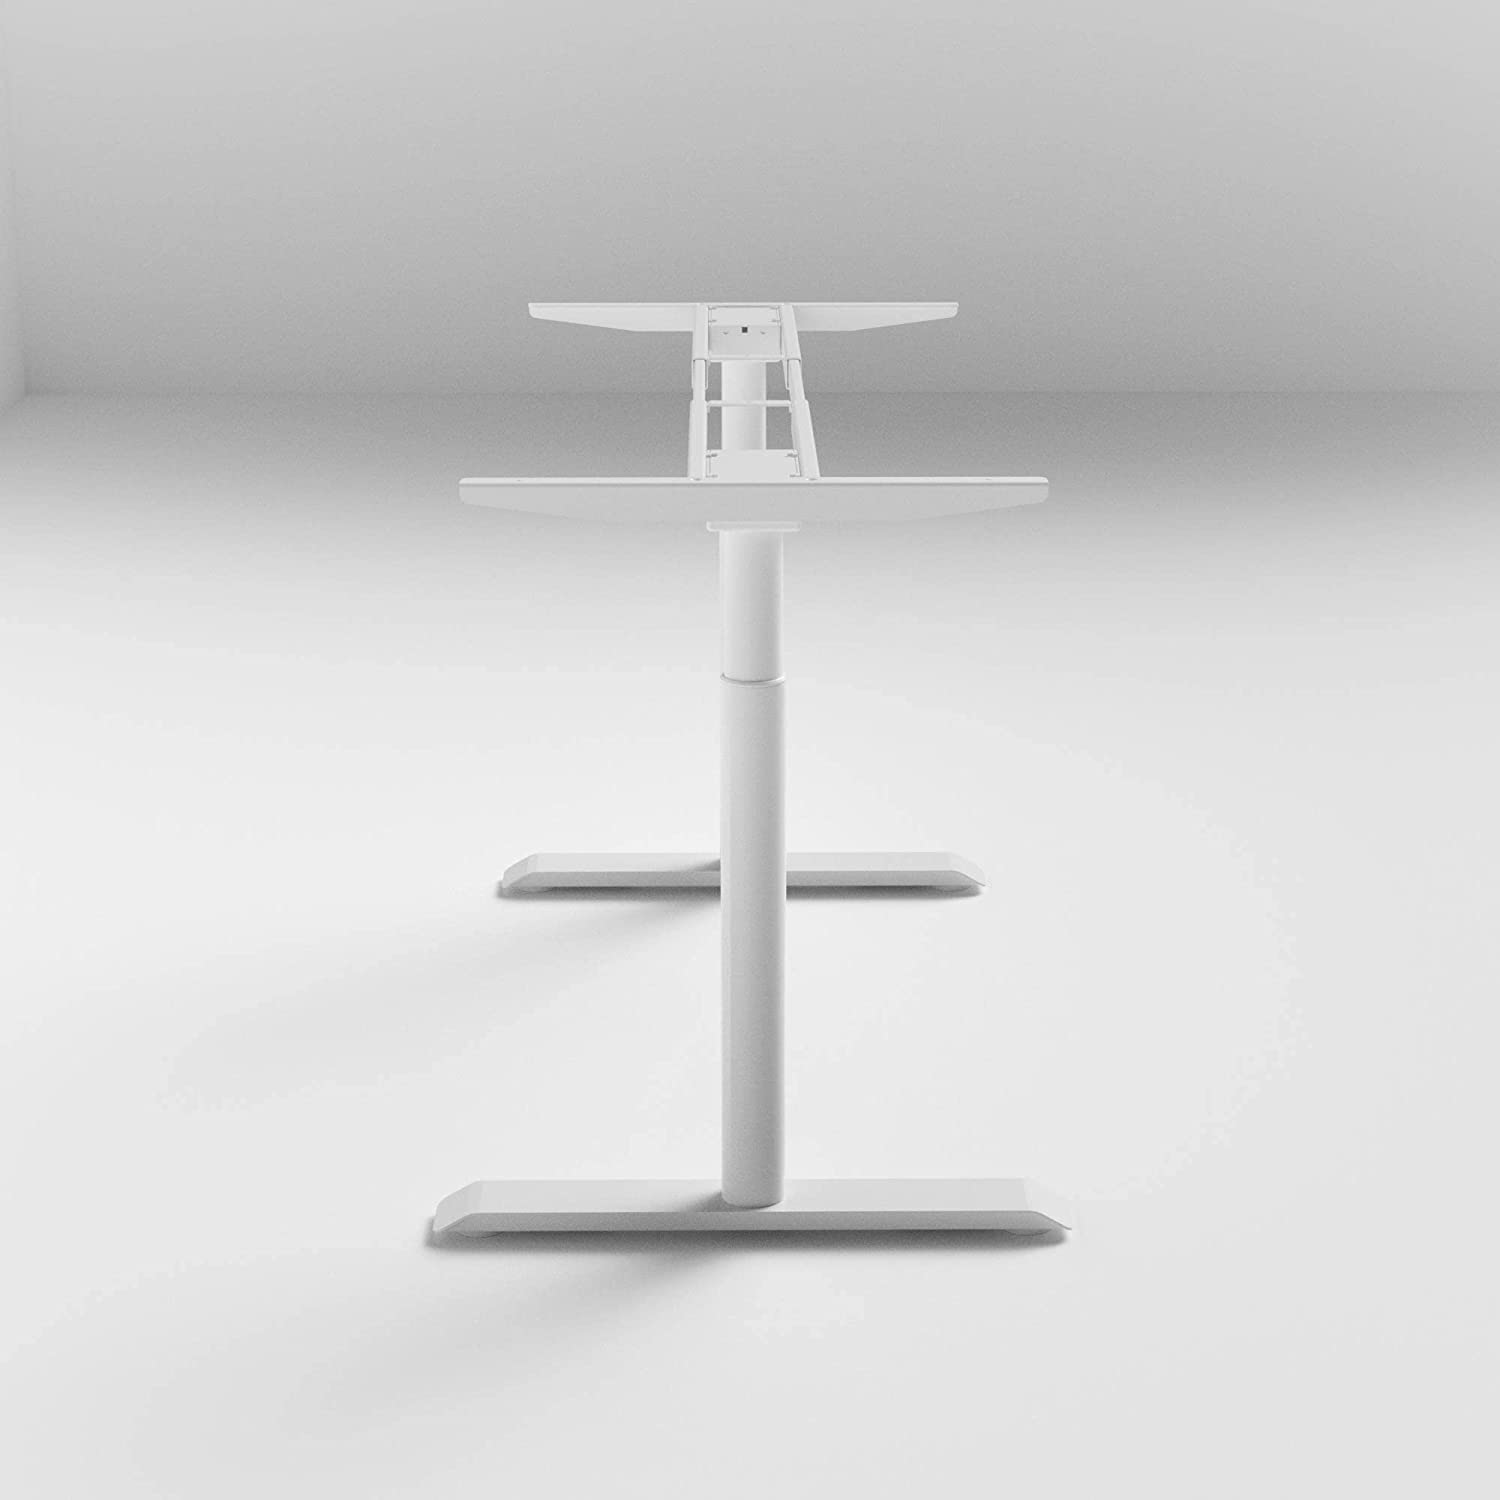 Basic Desk Frame By Navodesk, Manual Height Adjustable Desk Frame, Underframe for table top (Pin type)